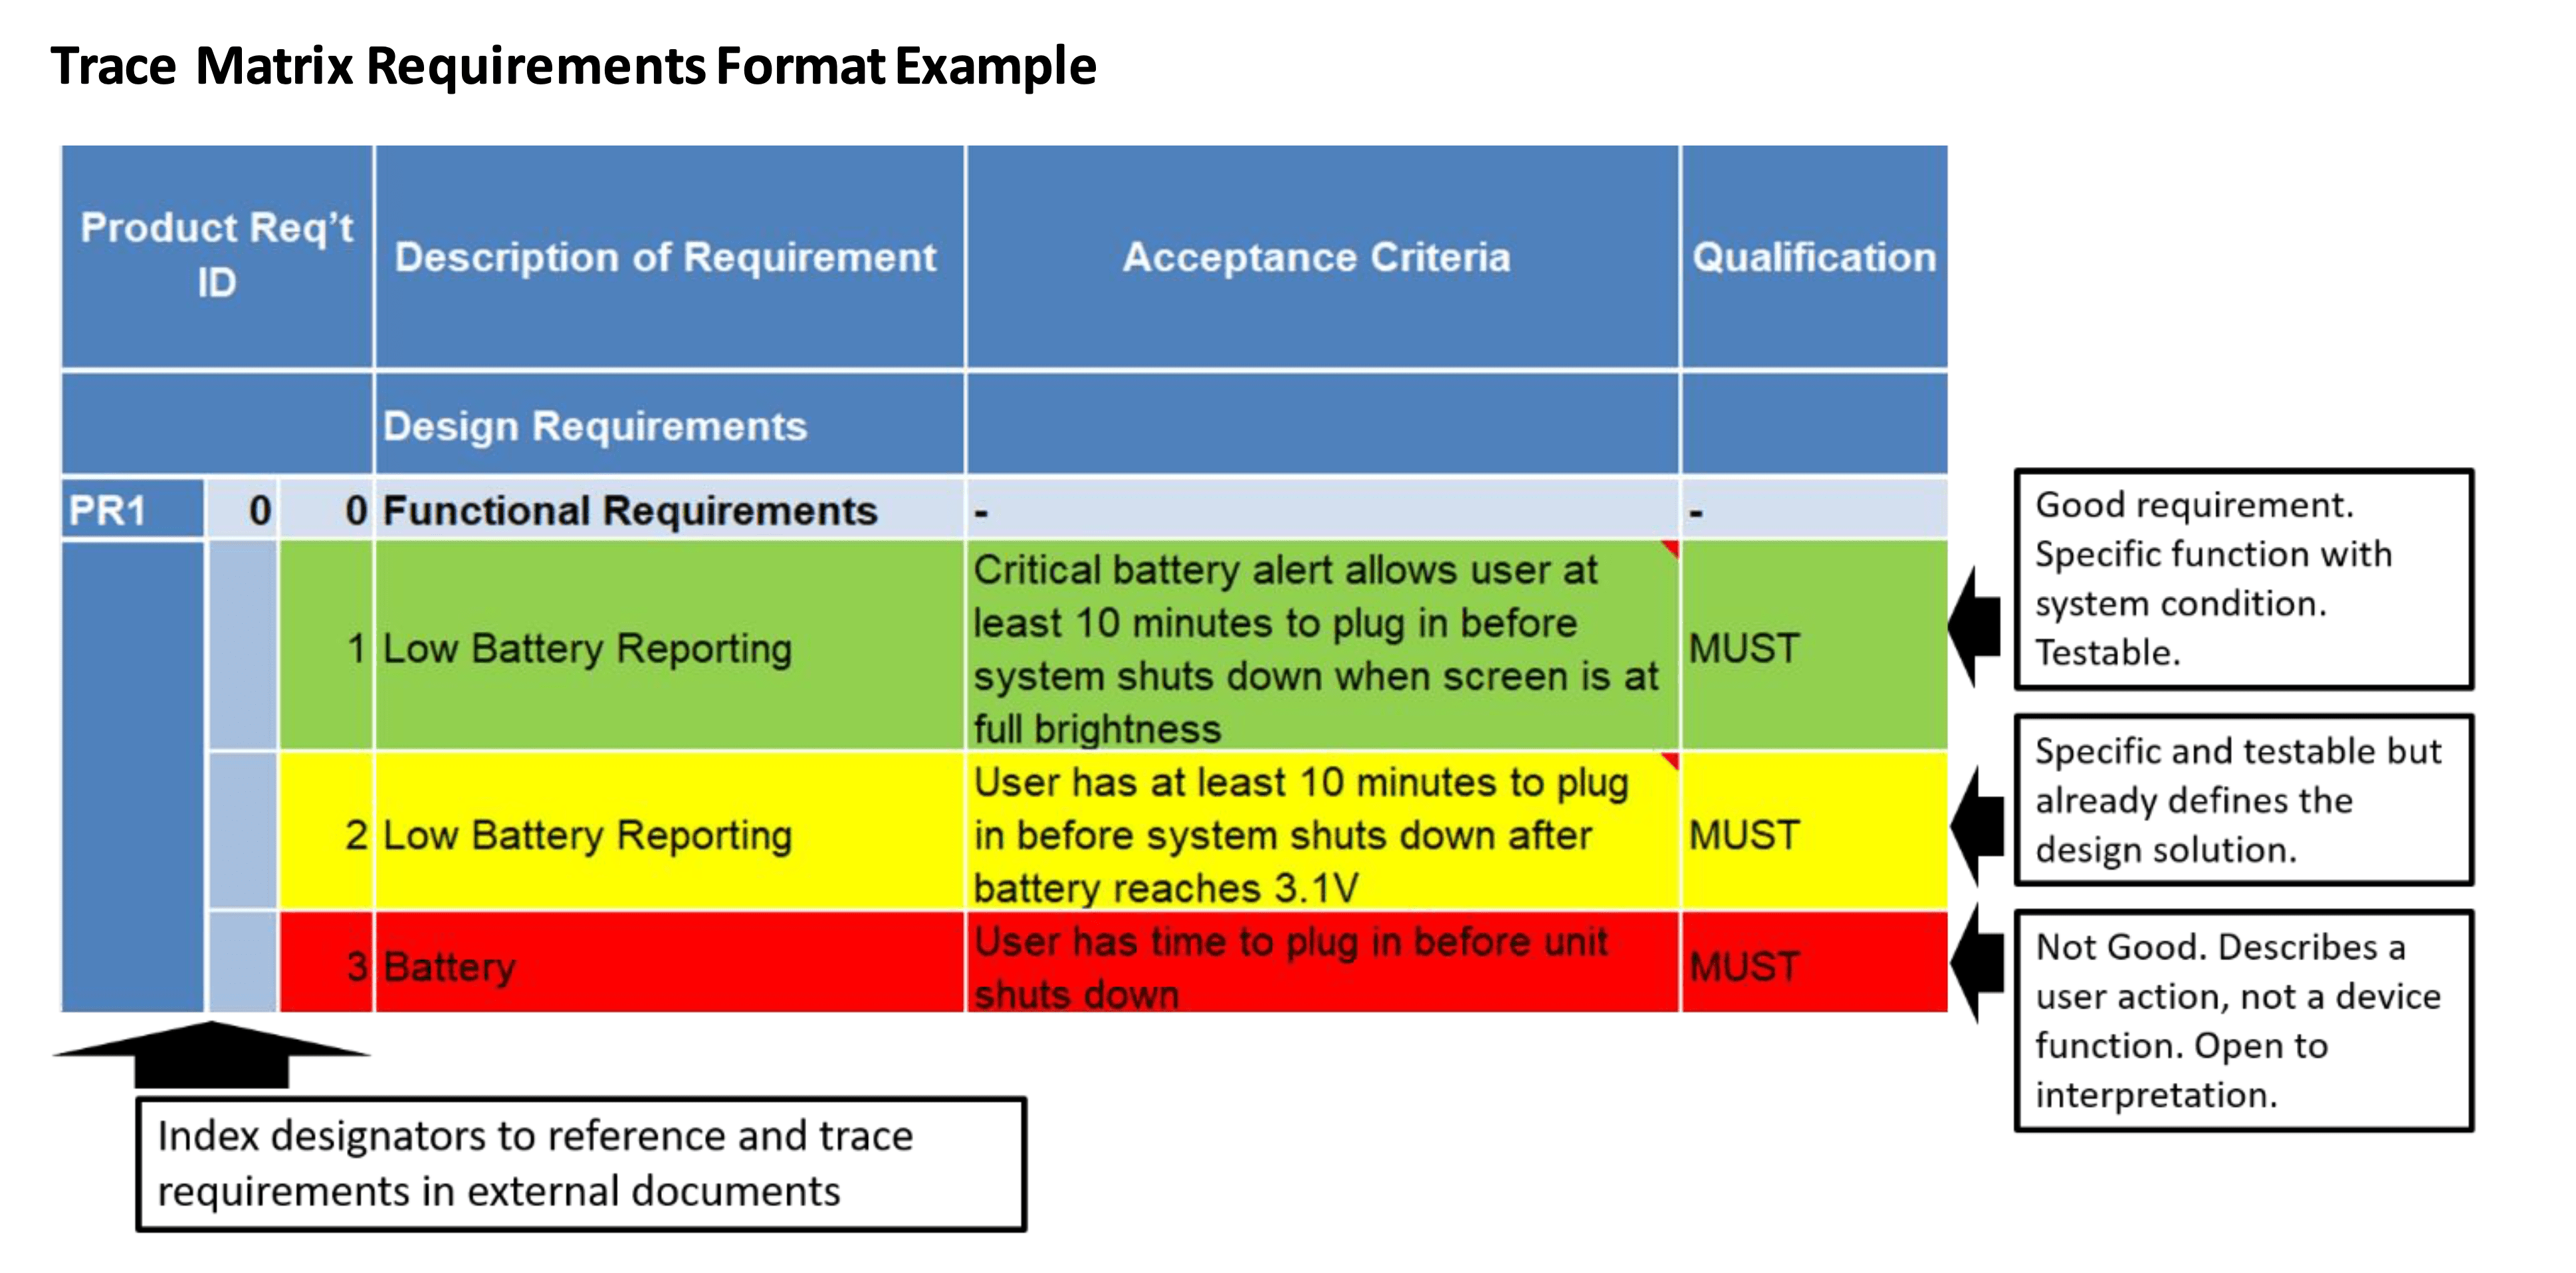 Trace Matrix Requirements Format Example